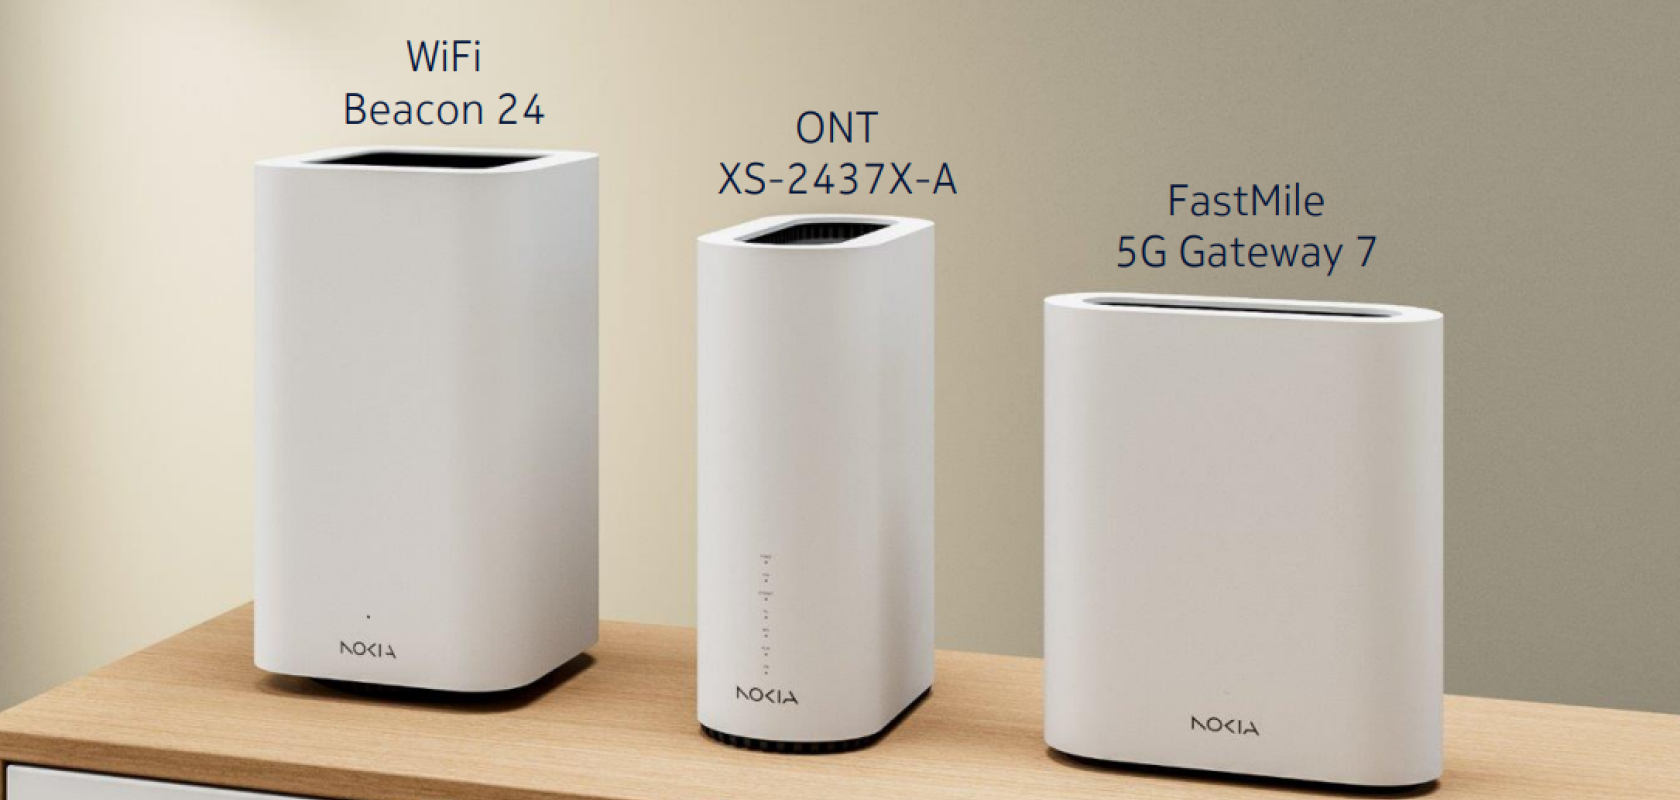 Nokia has launched its Wi-Fi 7 portfolio